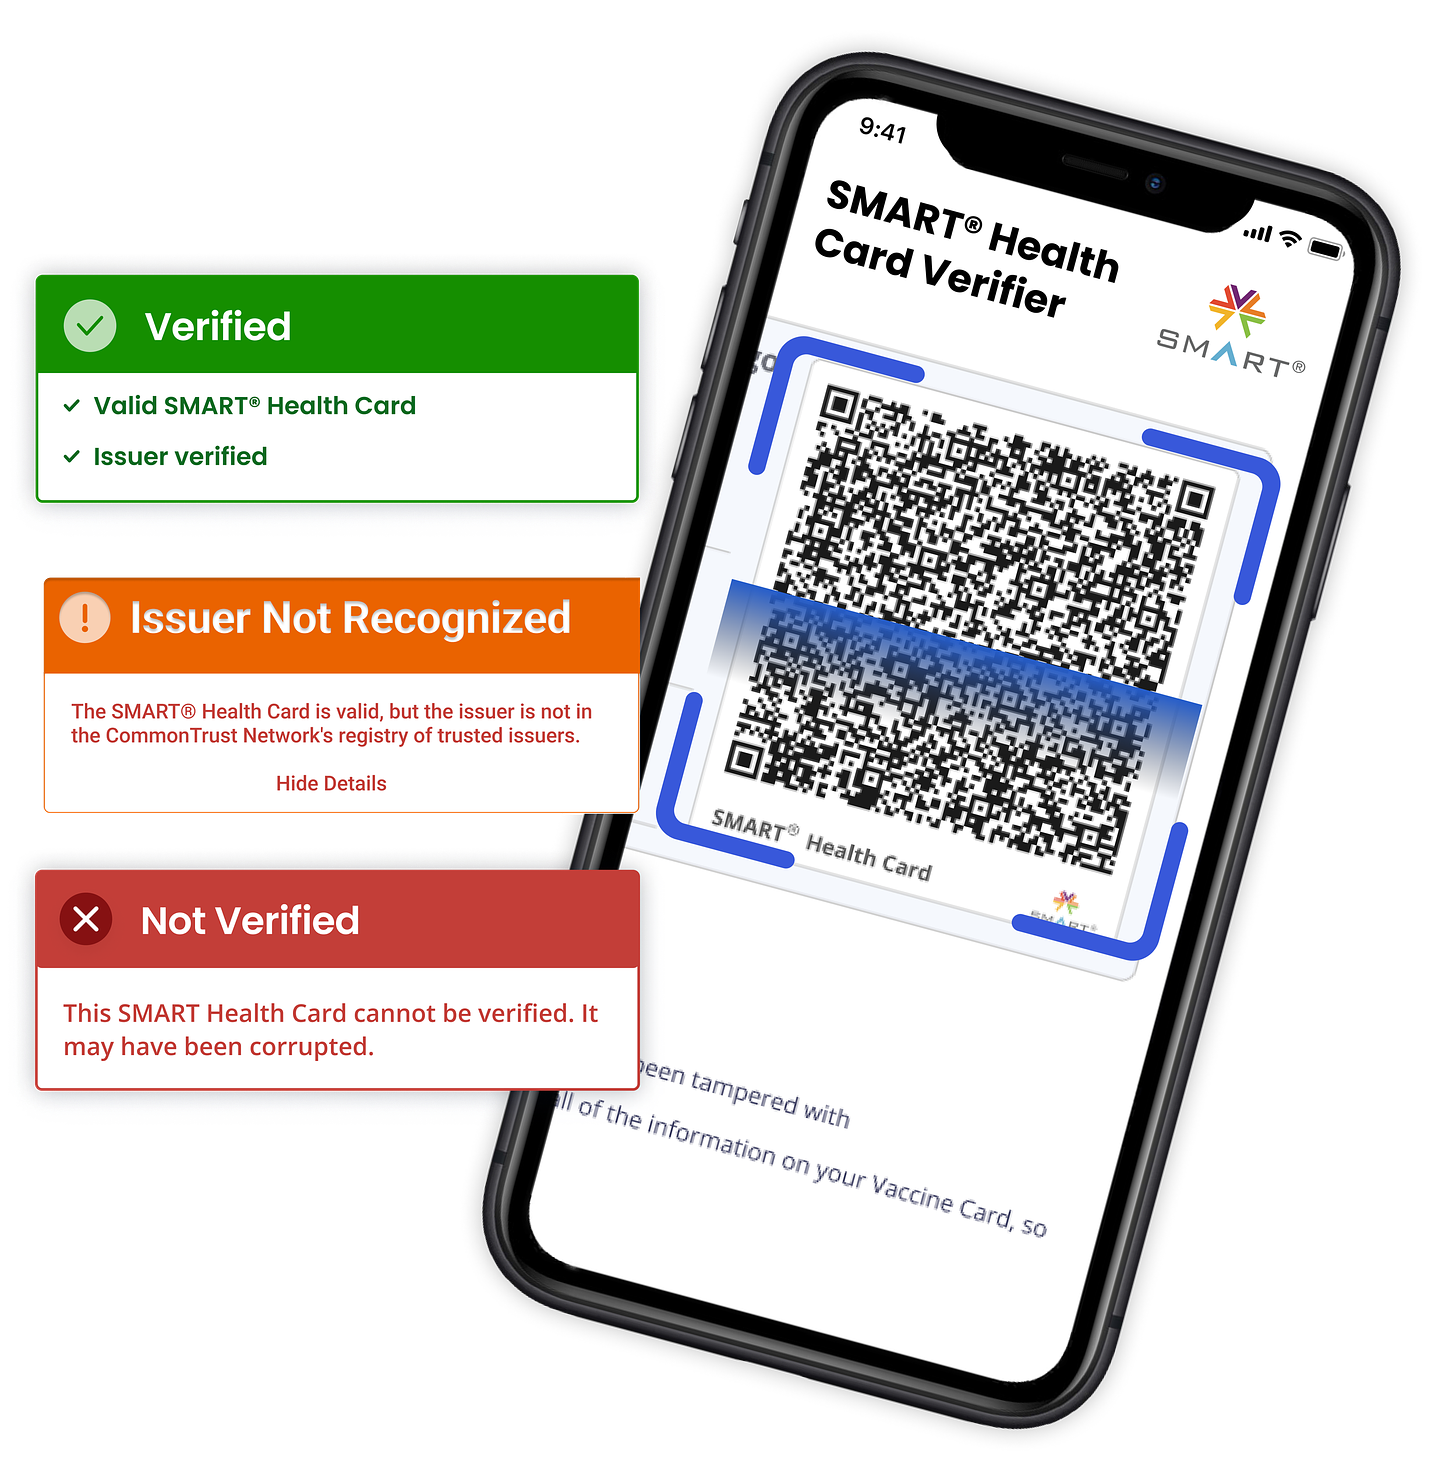 SMART Health Card Verifier App - FAQs